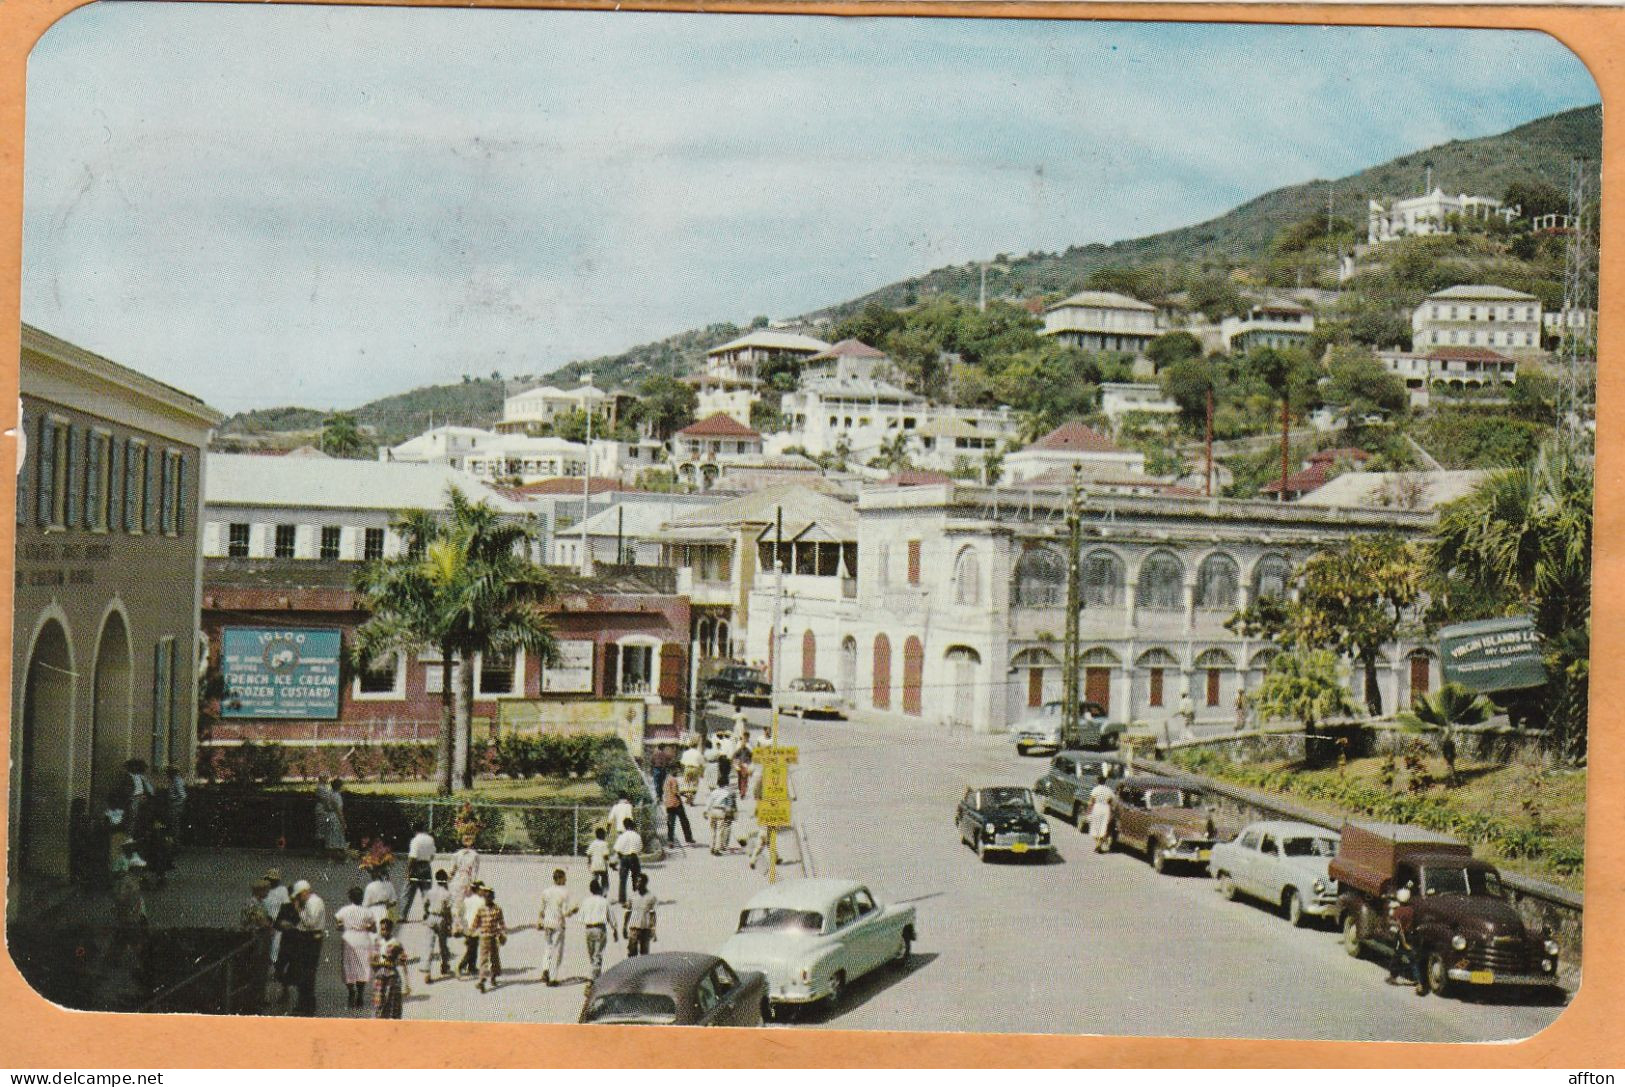 St Thomas IS VI Old Postcard Mailed - Virgin Islands, US